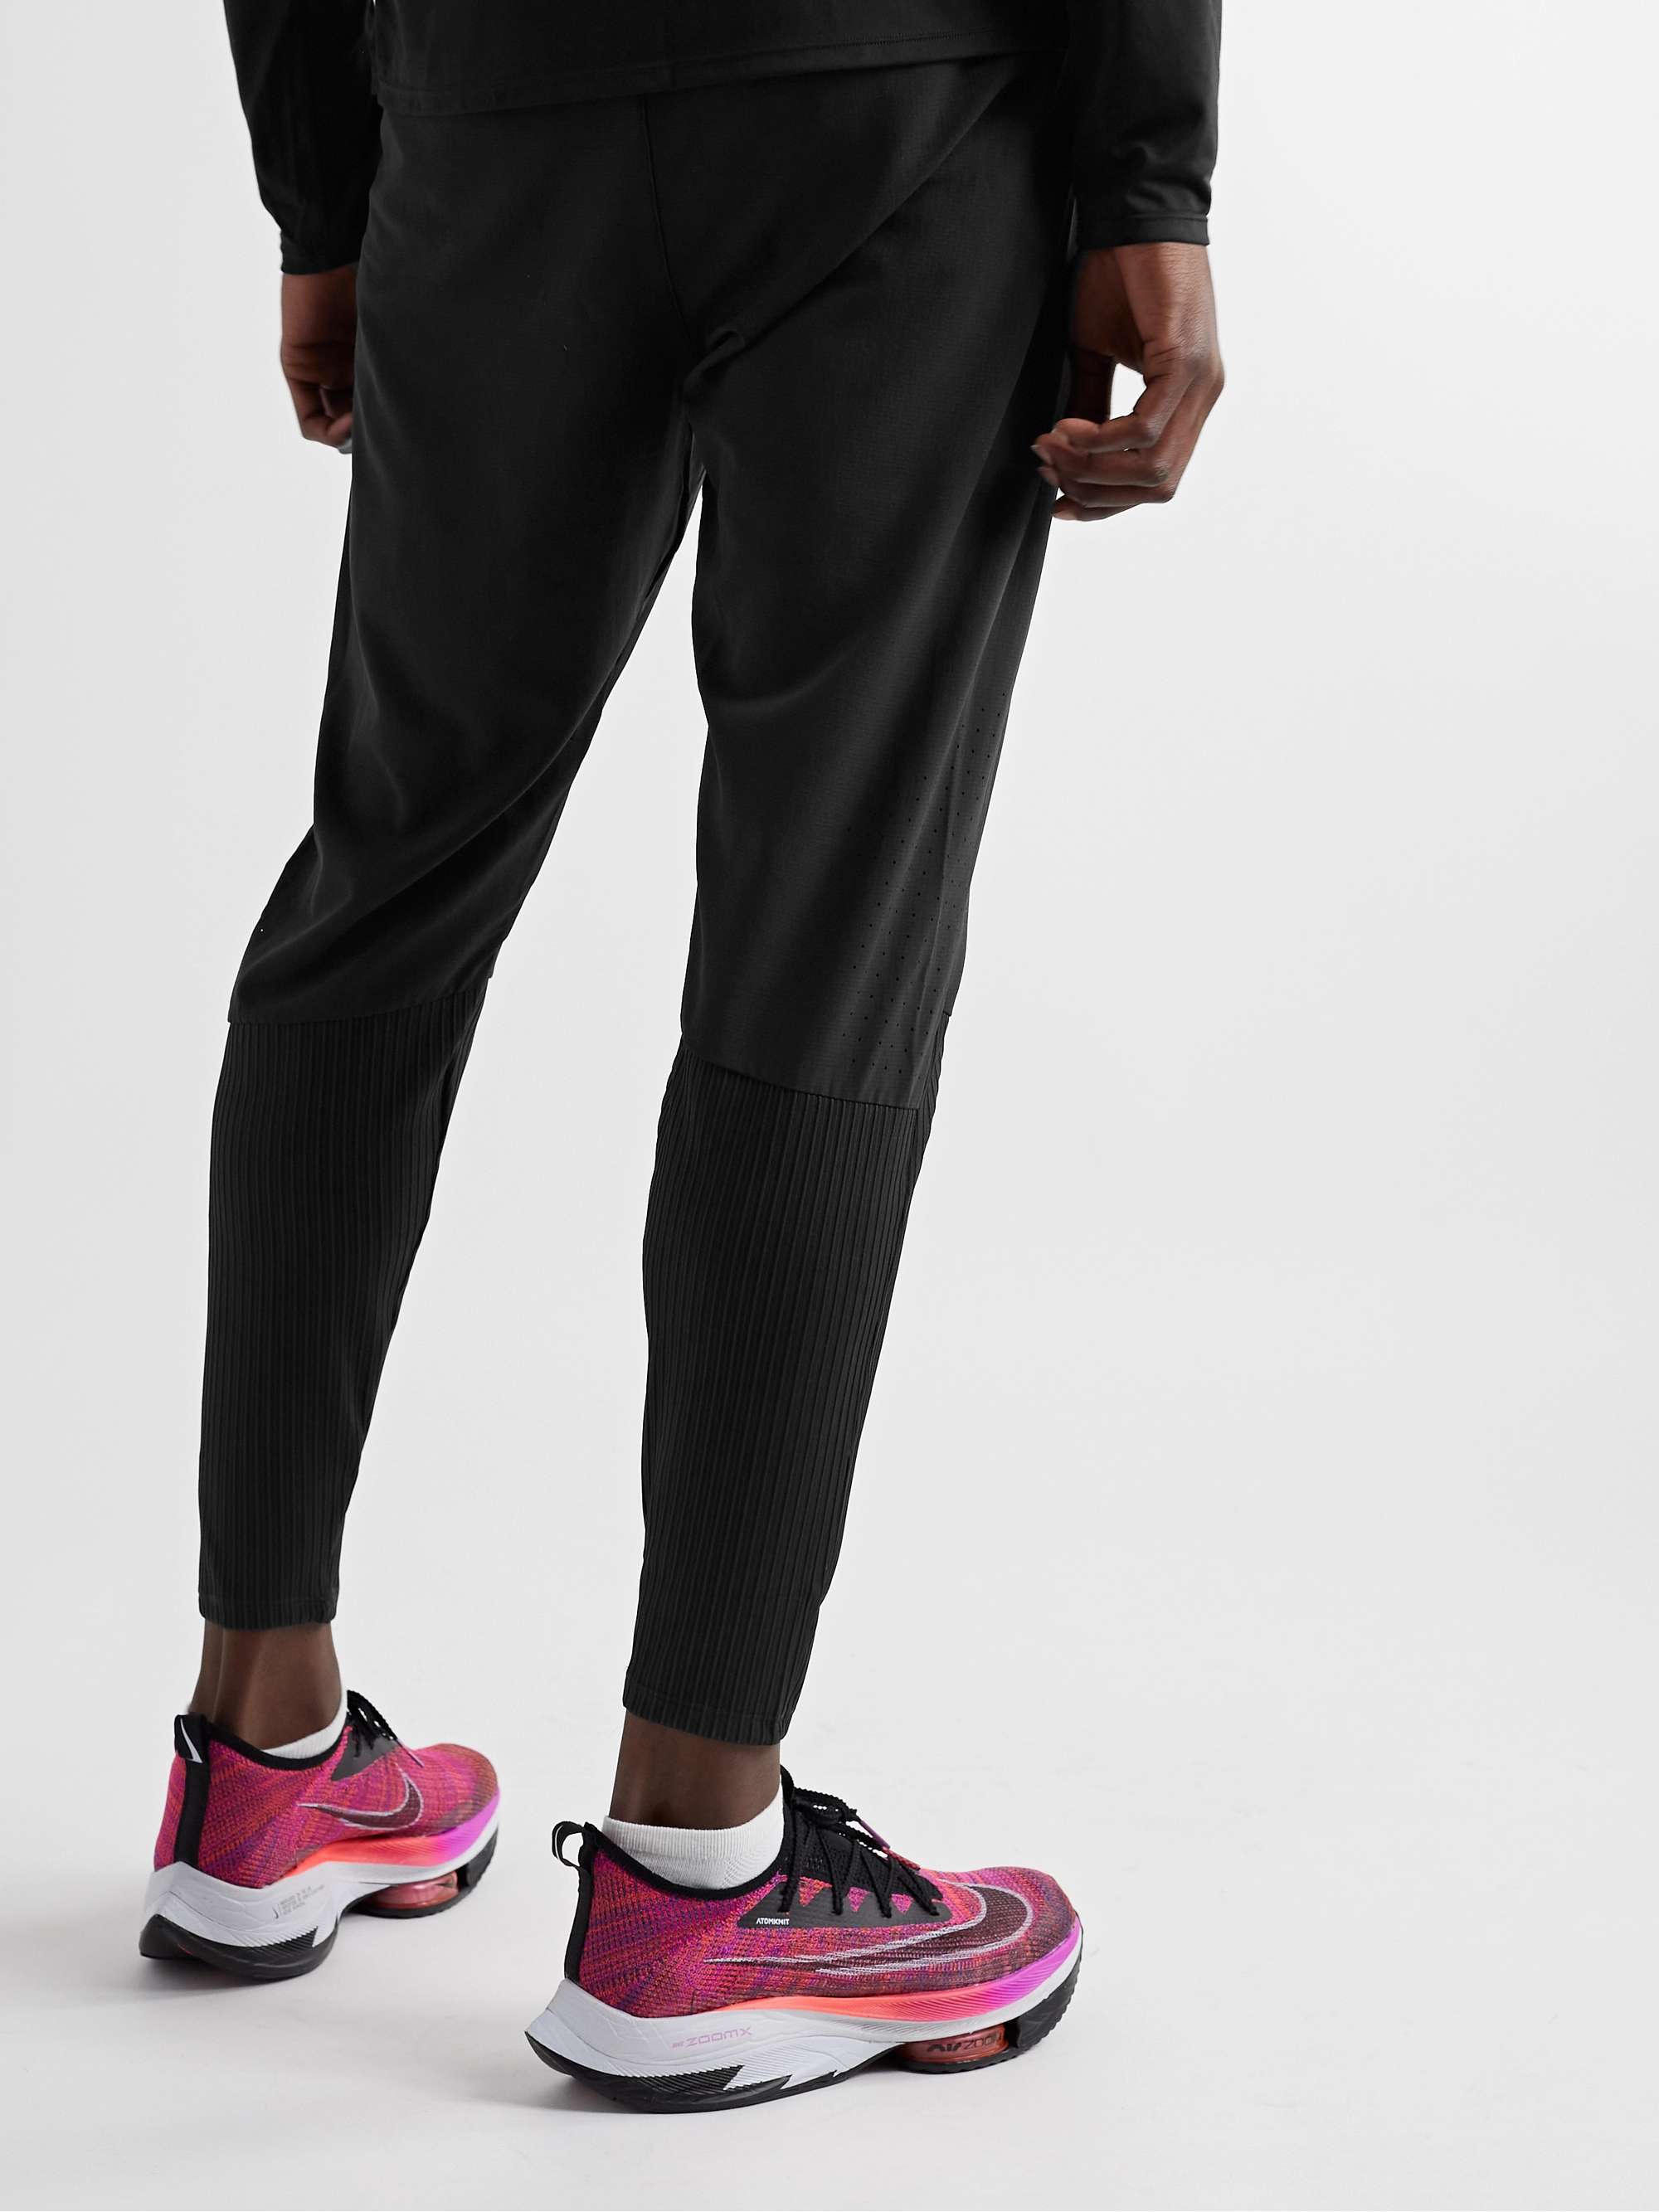 Black AeroSwift Slim-Fit Tapered Dri-FIT ADV Track Pants | NIKE RUNNING |  MR PORTER